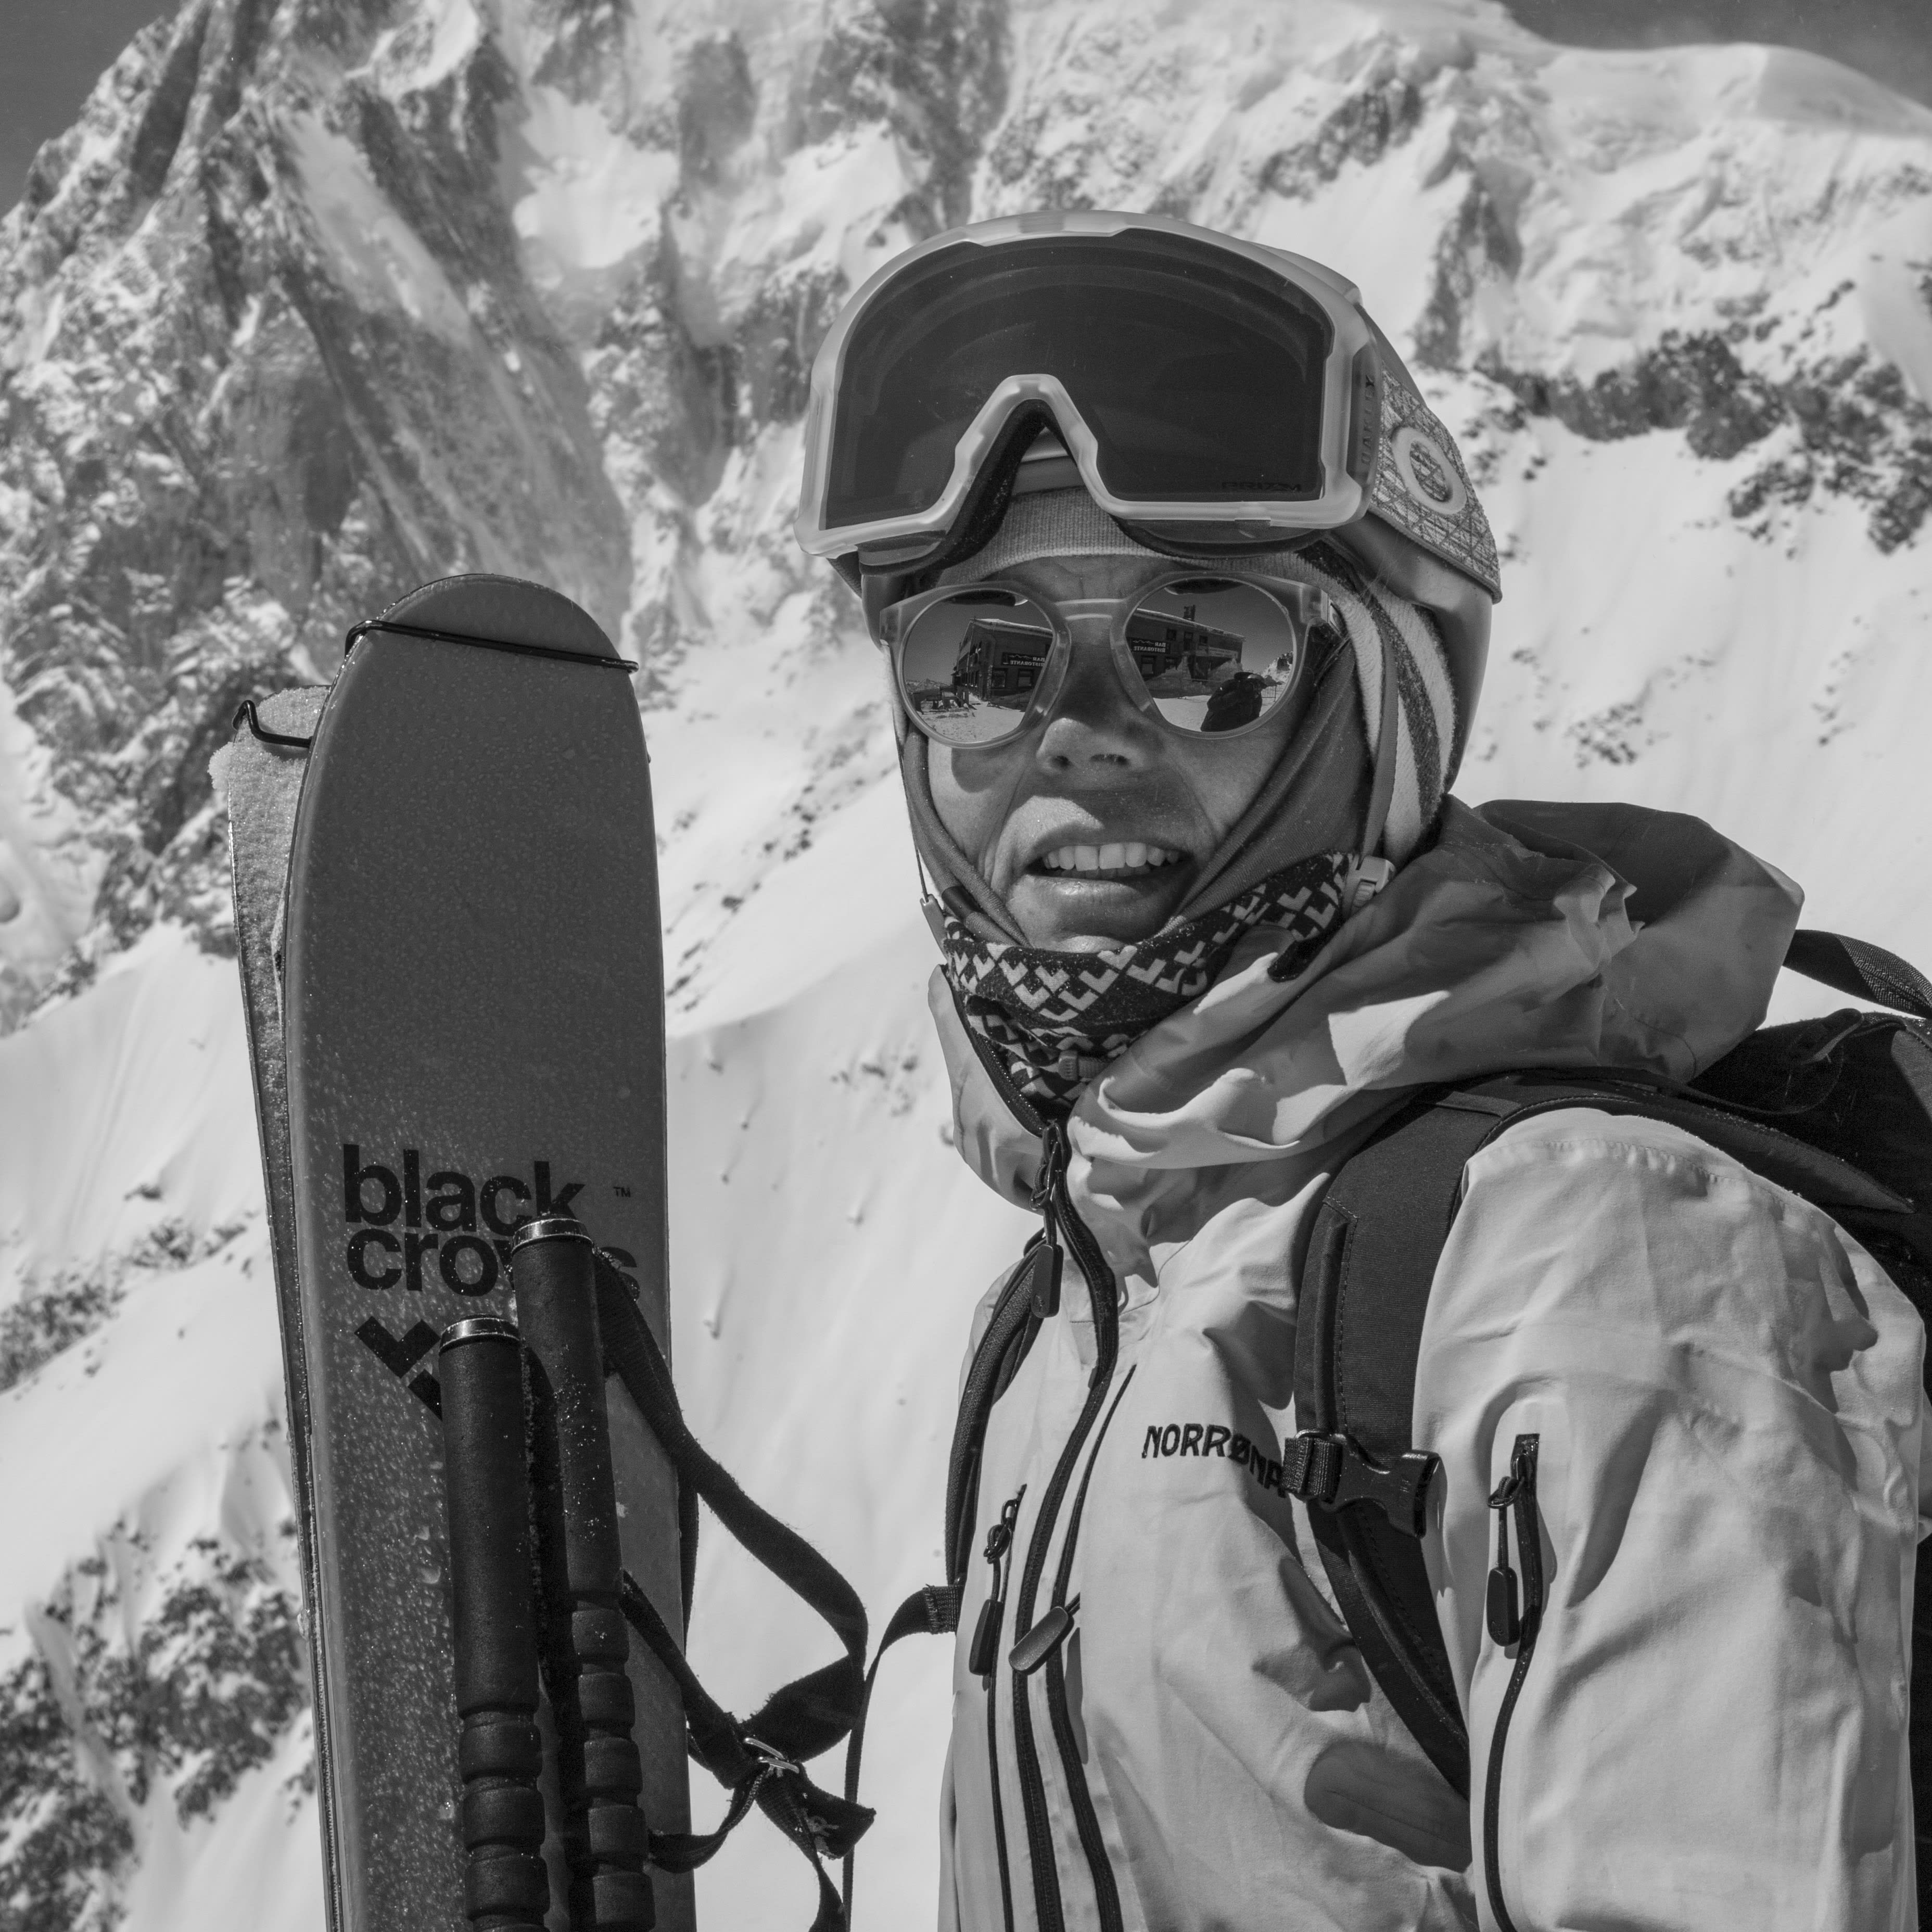 Chamonix Stretch Bib  Skiing outfit, Ski pants women, Ski bibs